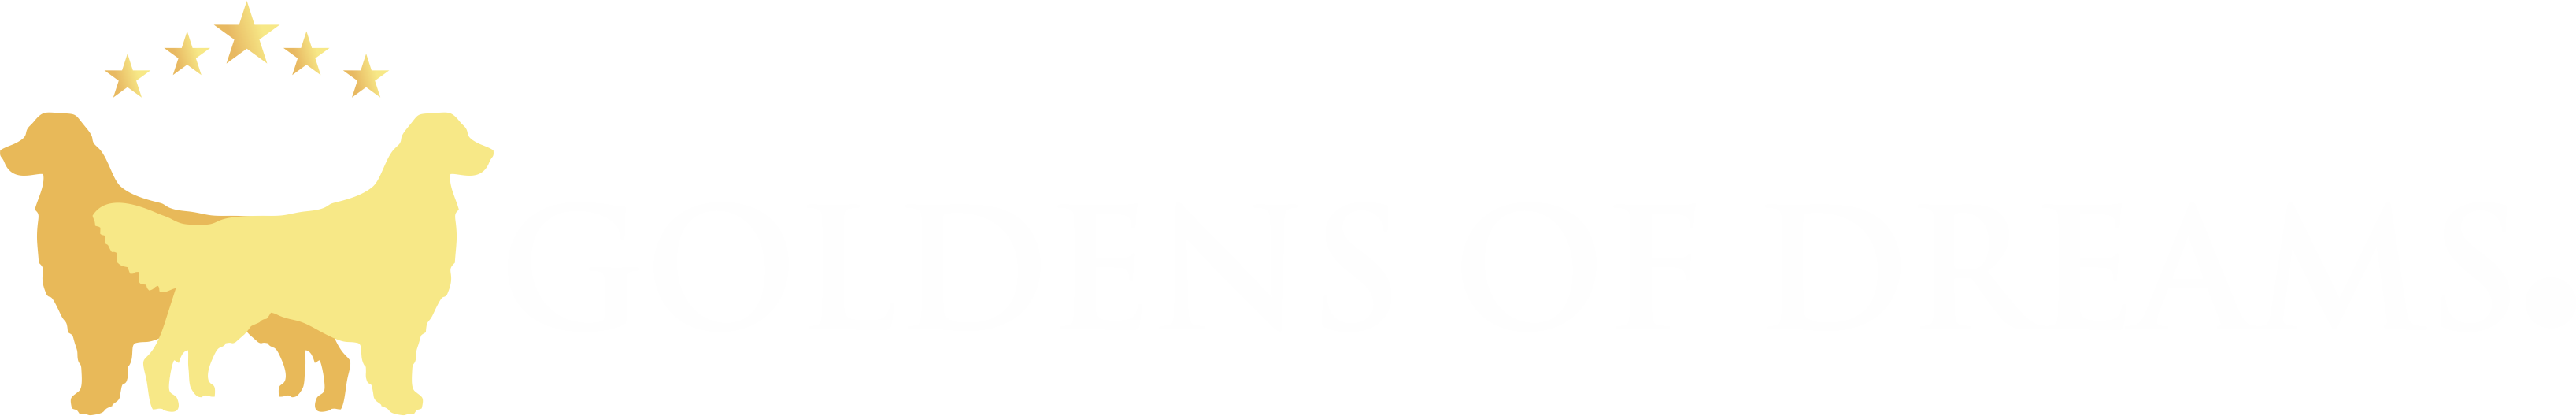 Goldens of Dreams - Logo